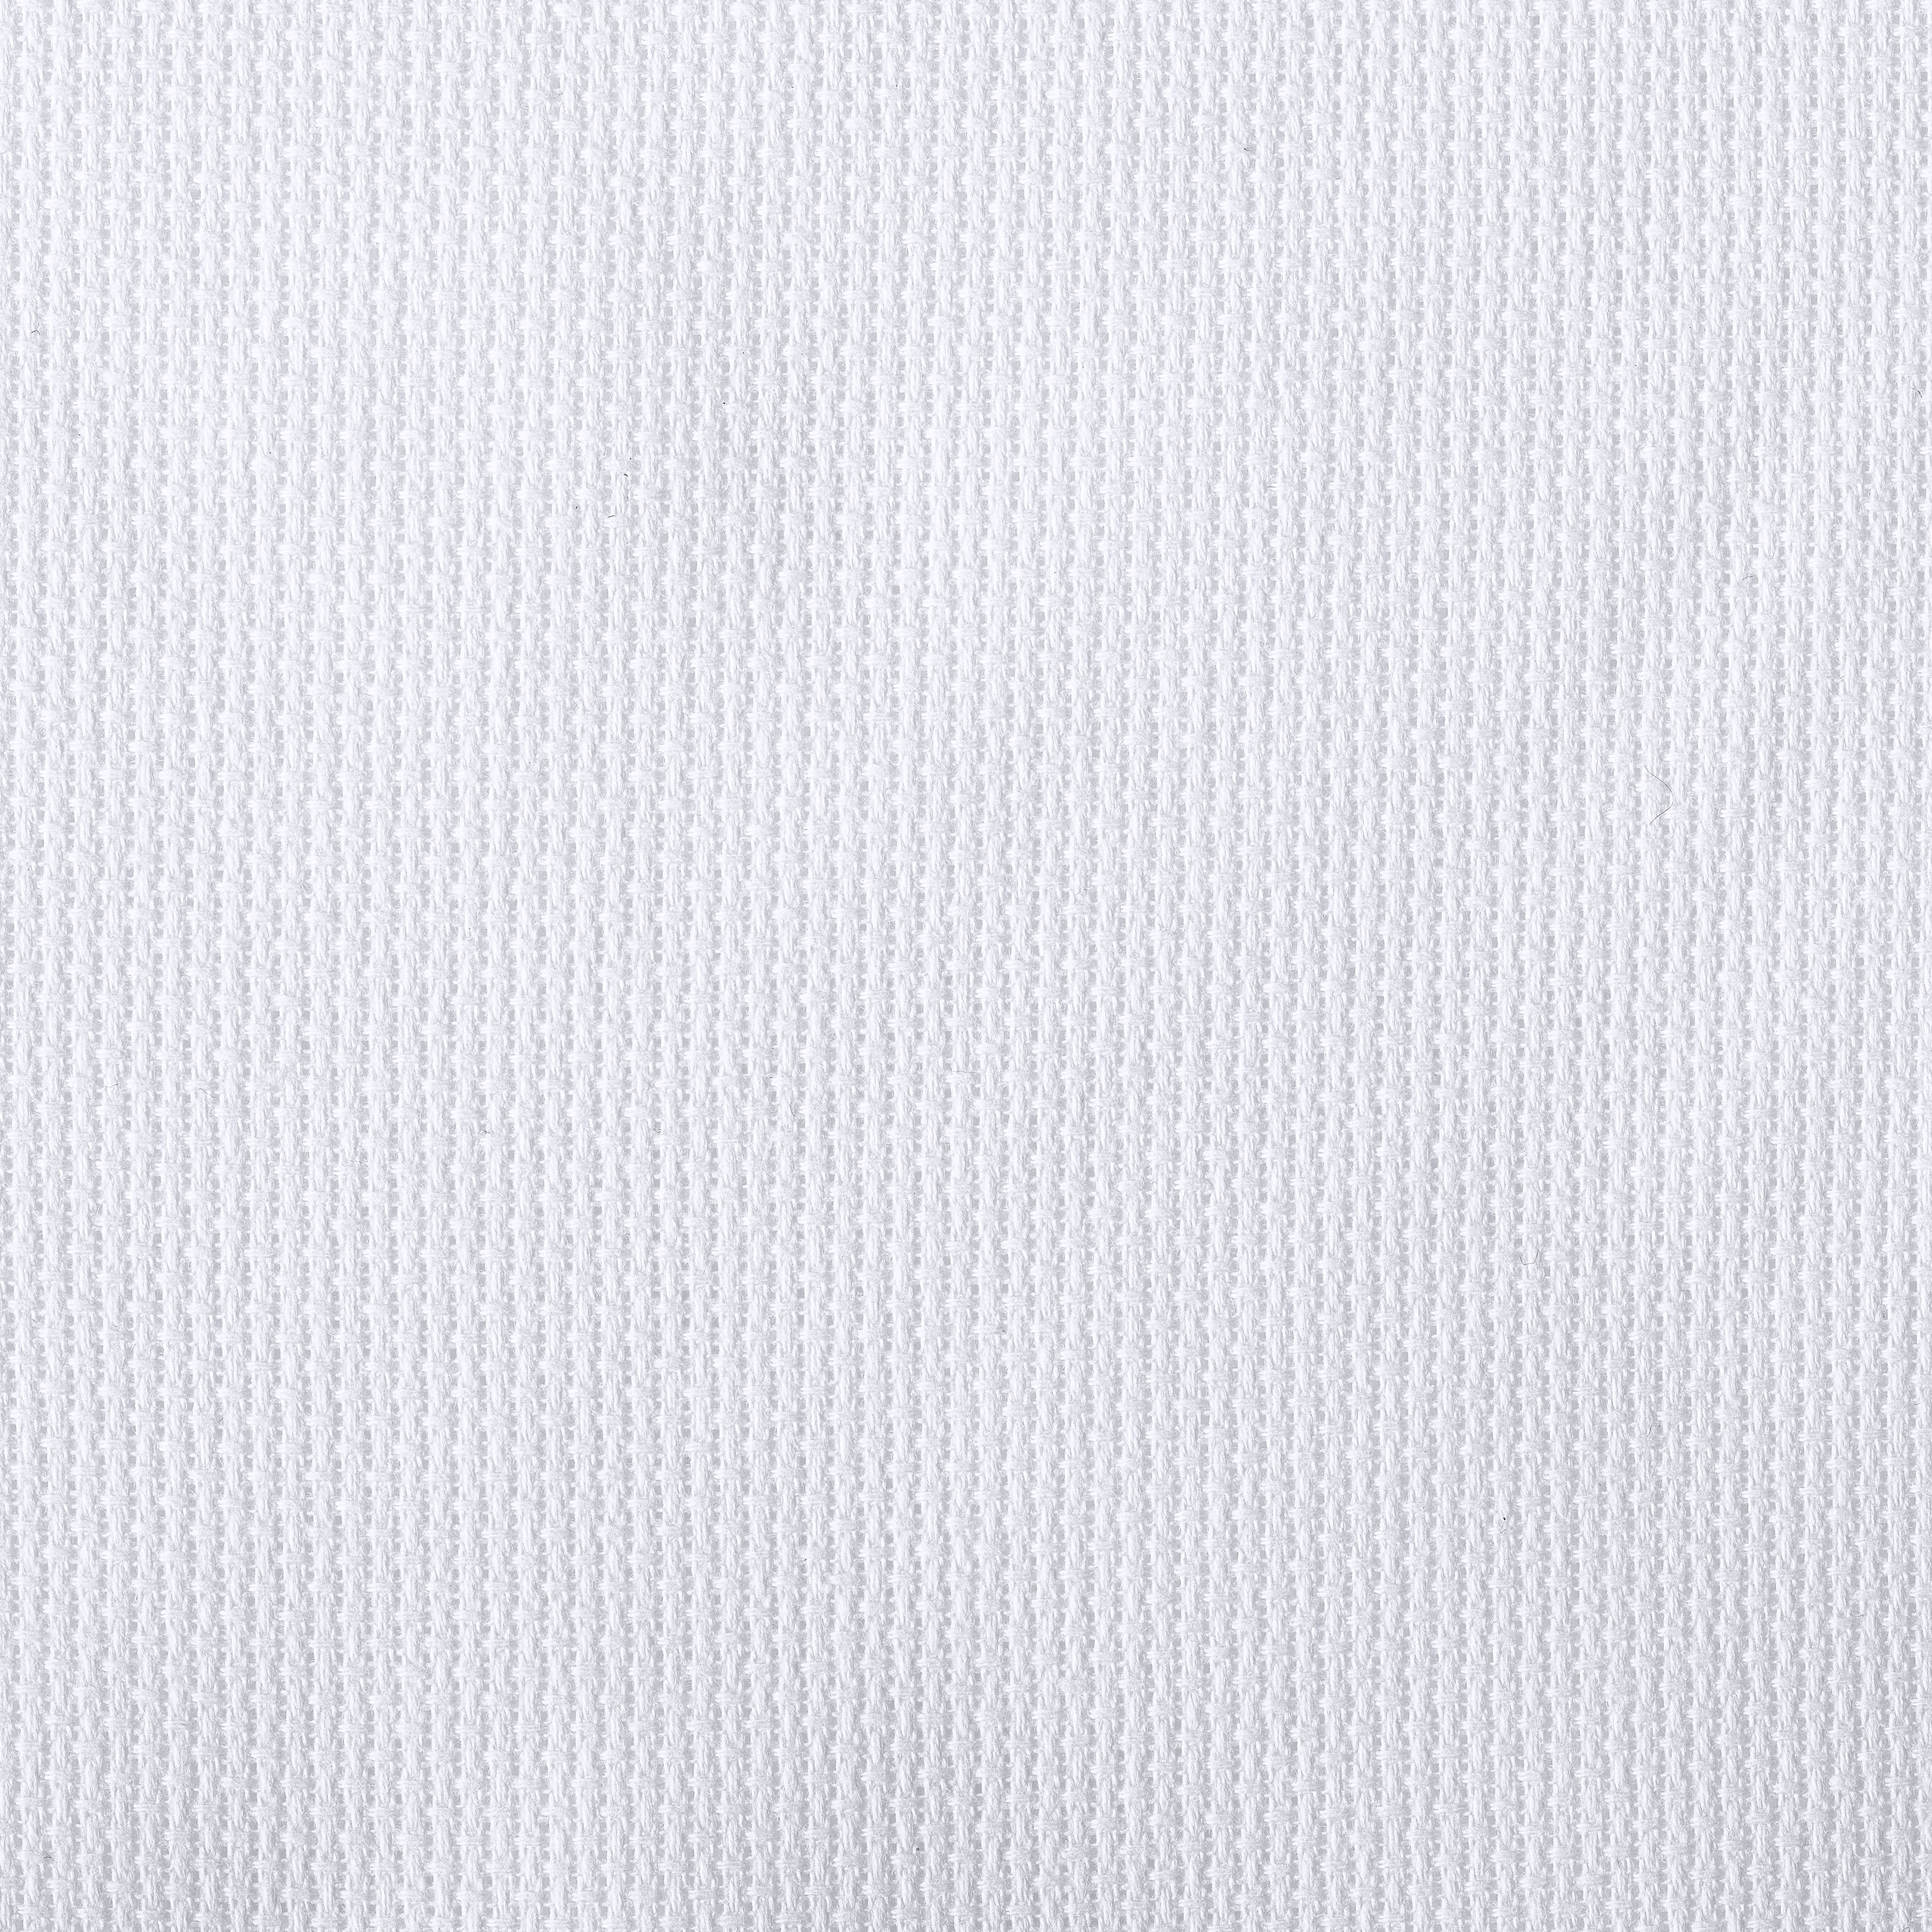 SOFT White AIDA Cloth 16 Count - 19 x 19